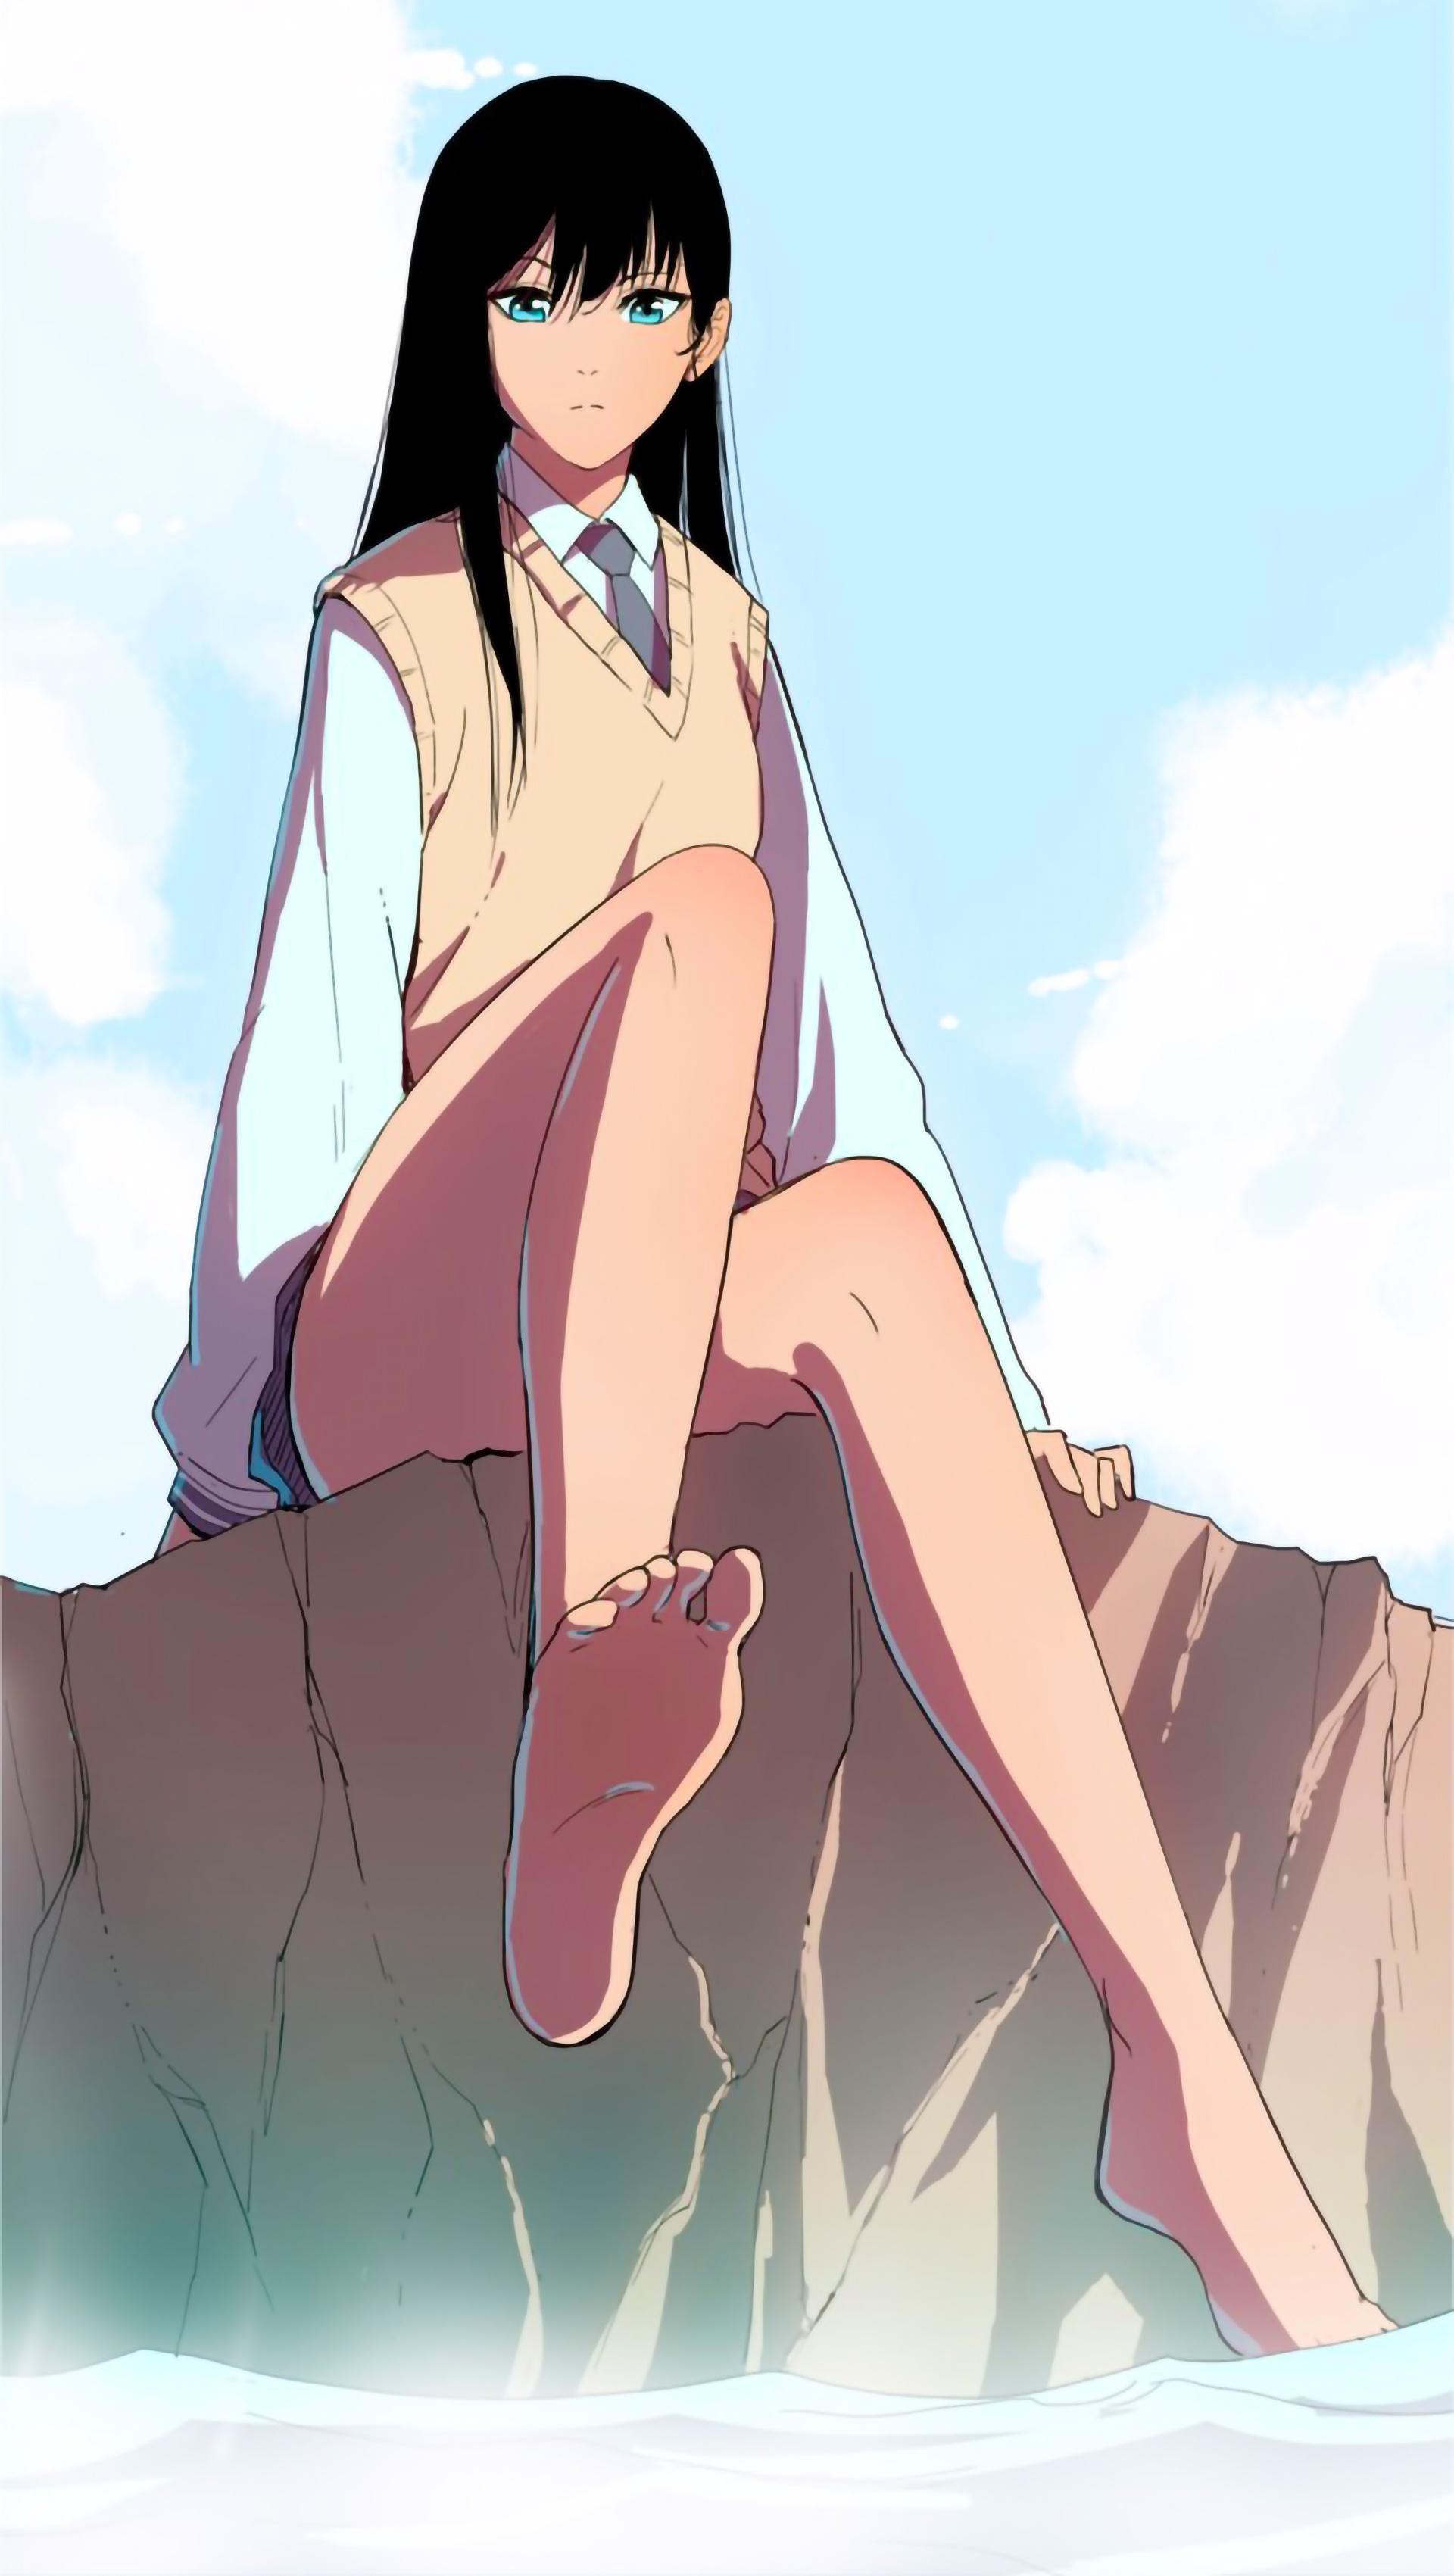 Manga Webtoon Manhwa Feet Black Hair Blue Eyes Tie School Uniform Legs Water Anime Girls 1920x3401